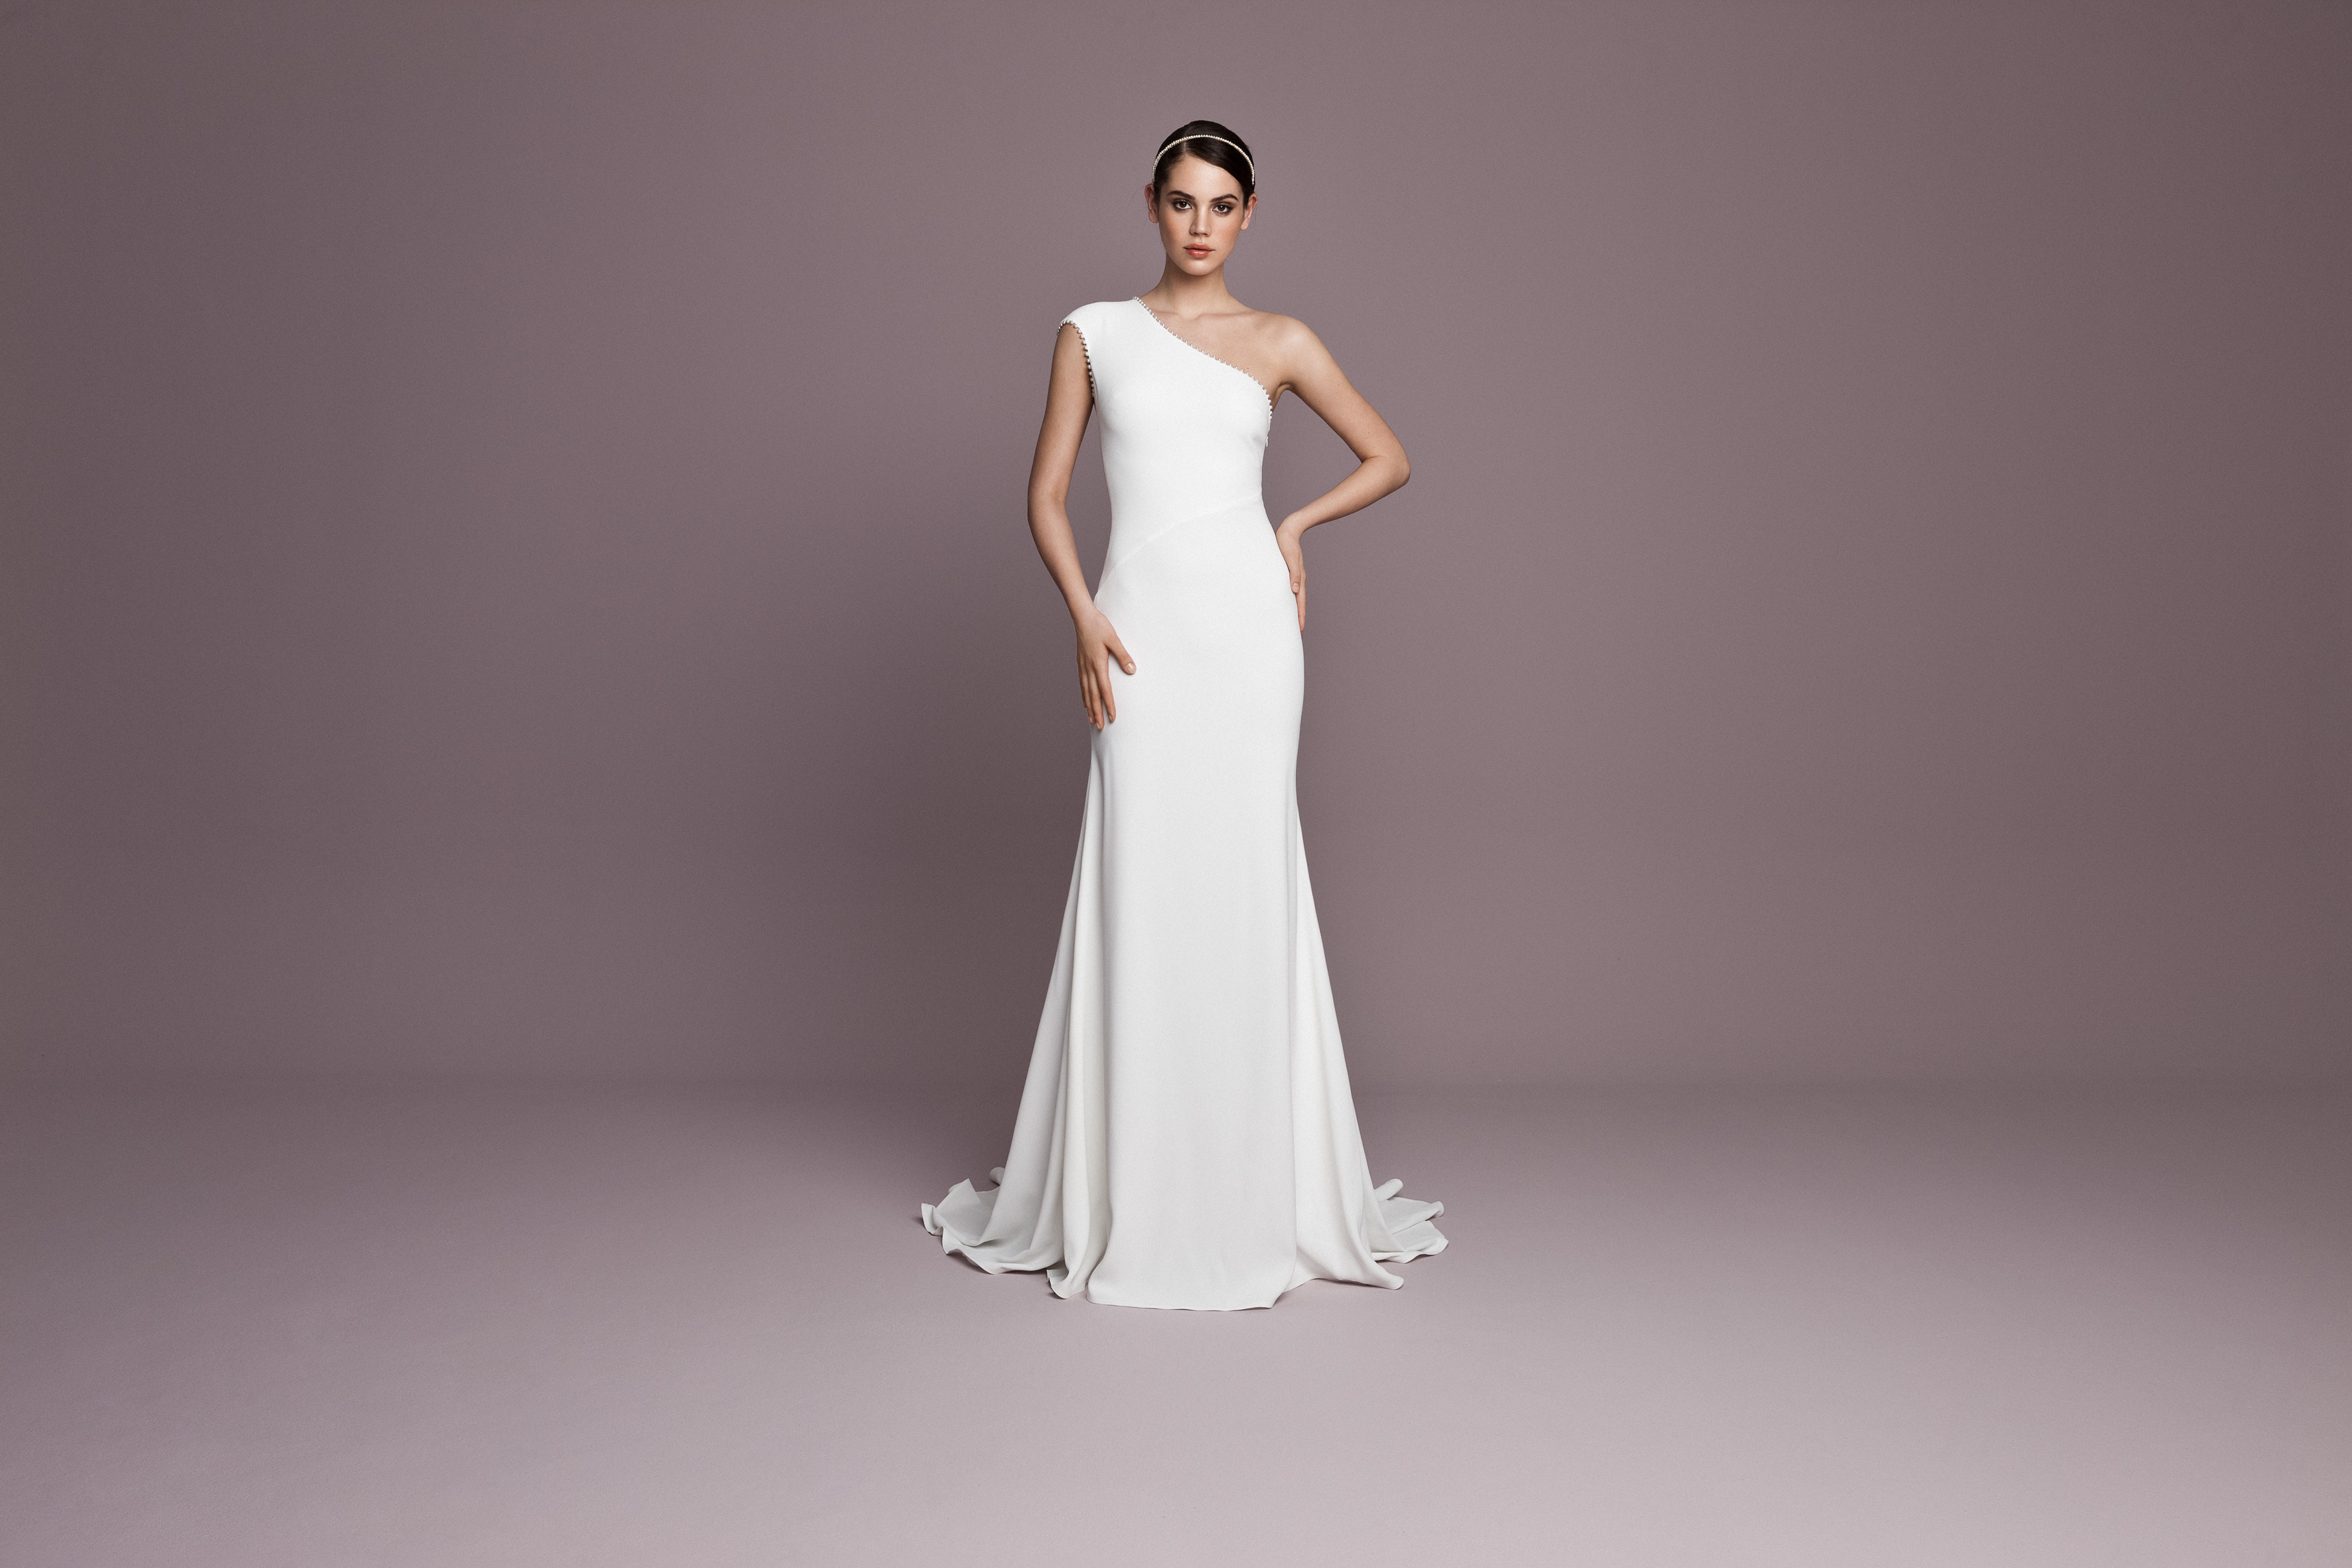 K'Mich Weddings - wedding planning - one shoulder white wedding dress - sunset lookbook